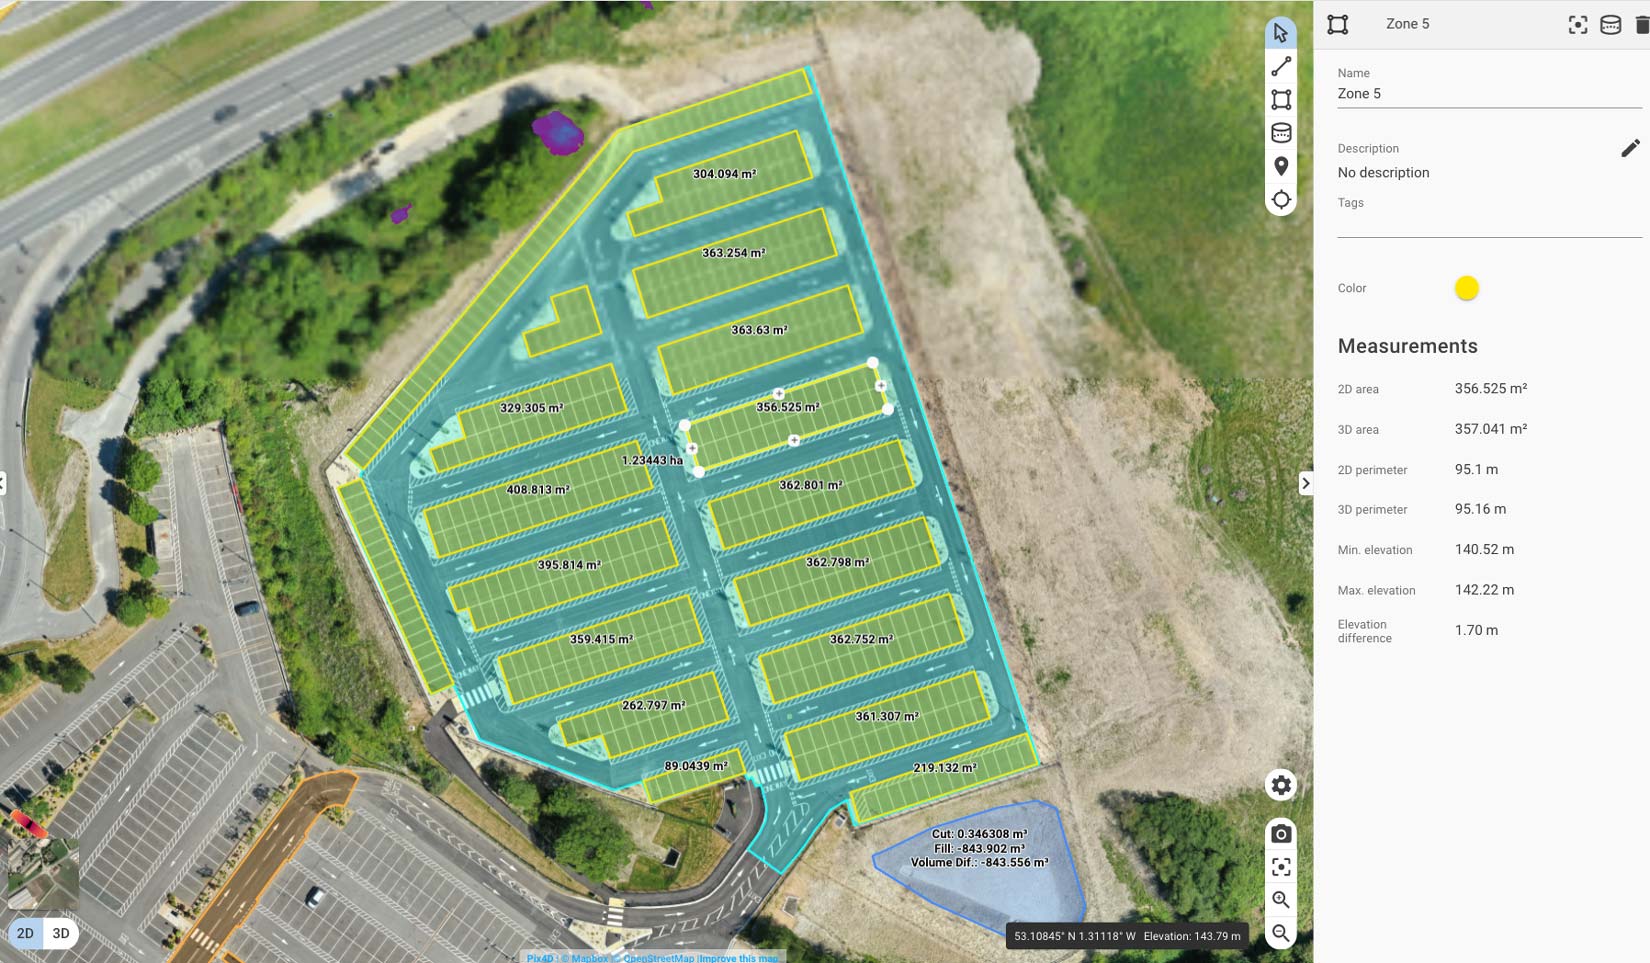 Orthomosaic map of carpark taken by mavic 2 pro drone